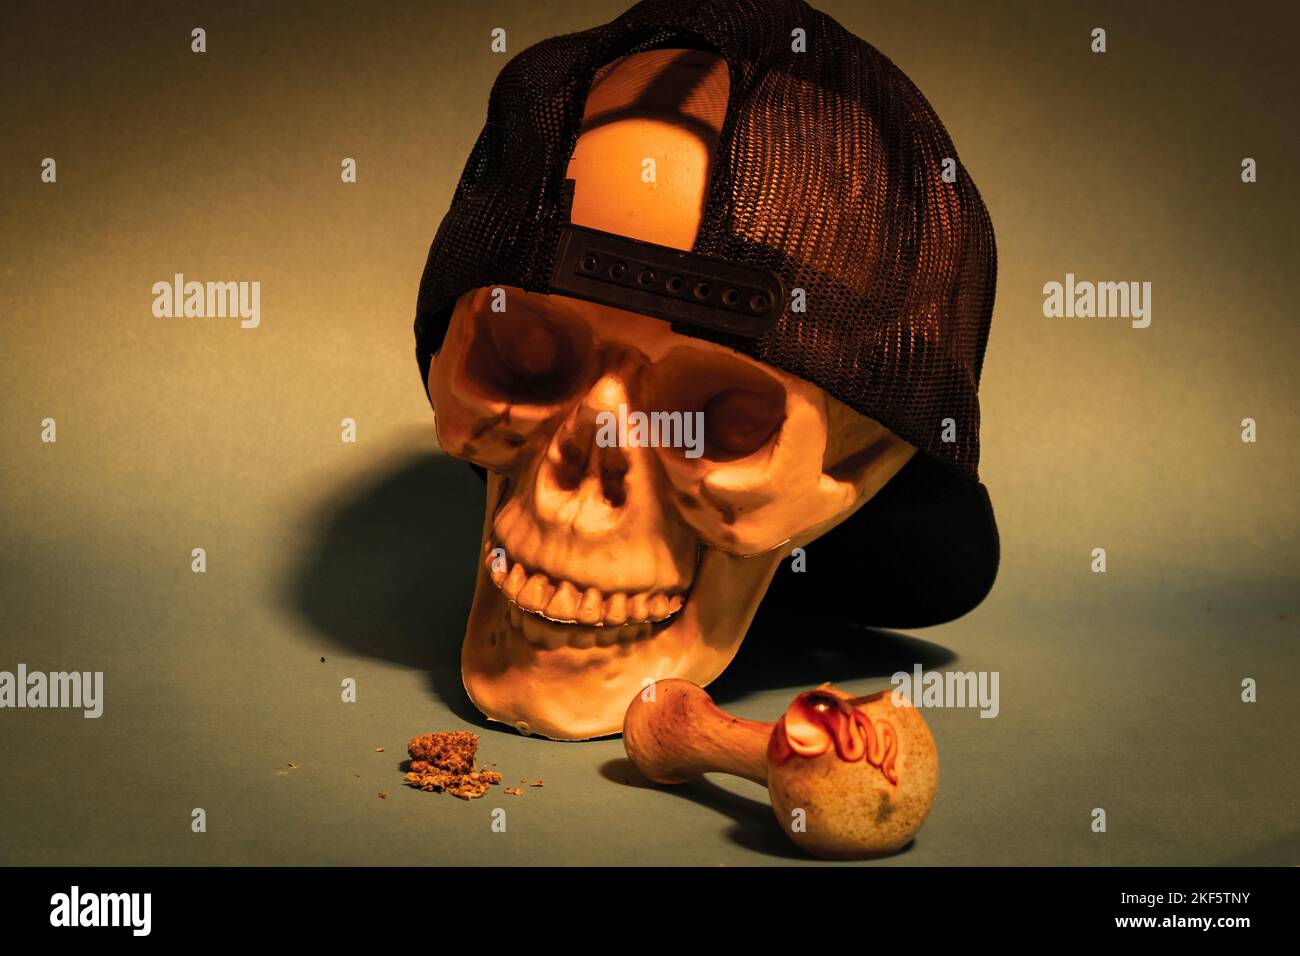 Skull wearing a backwards hat is ready to smoke a bowl of marijuana Stock Photo